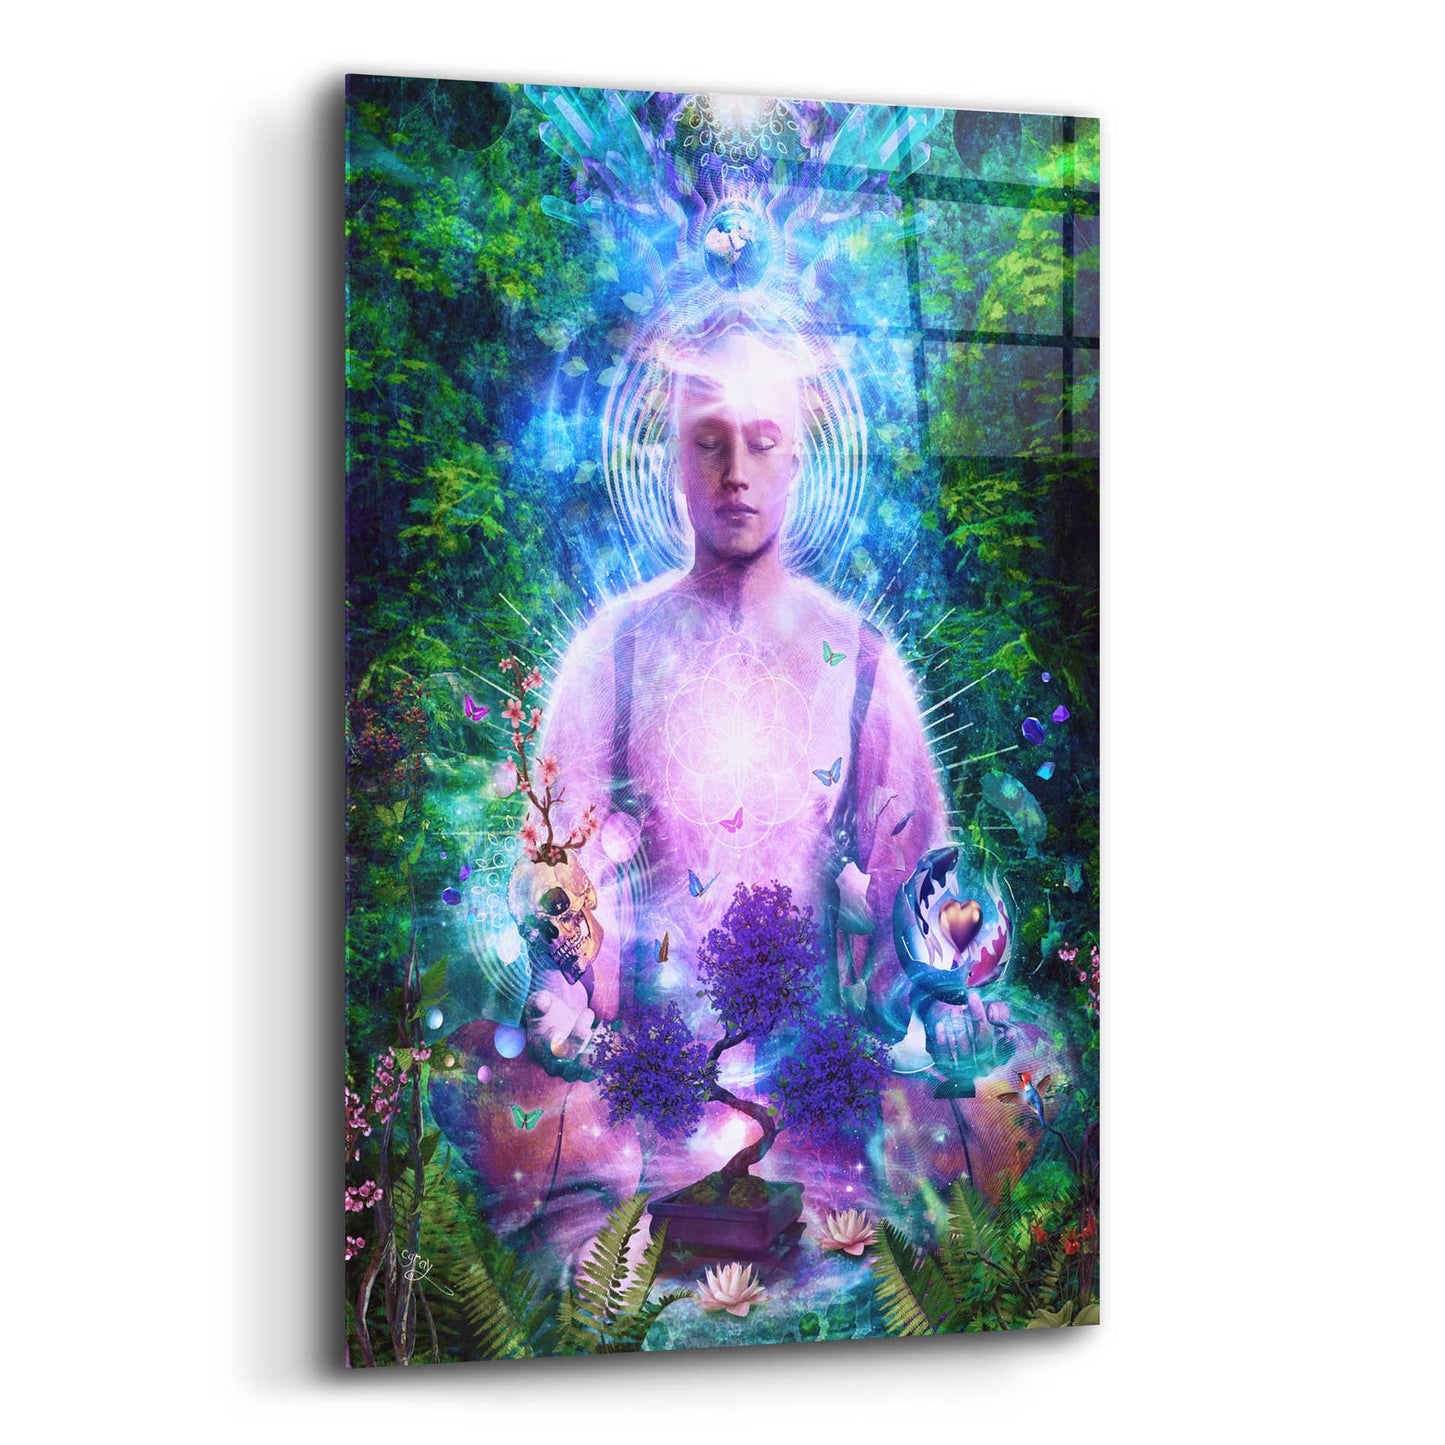 Epic Art 'Daily Meditation' by Cameron Gray Acrylic Glass Wall Art,16x24